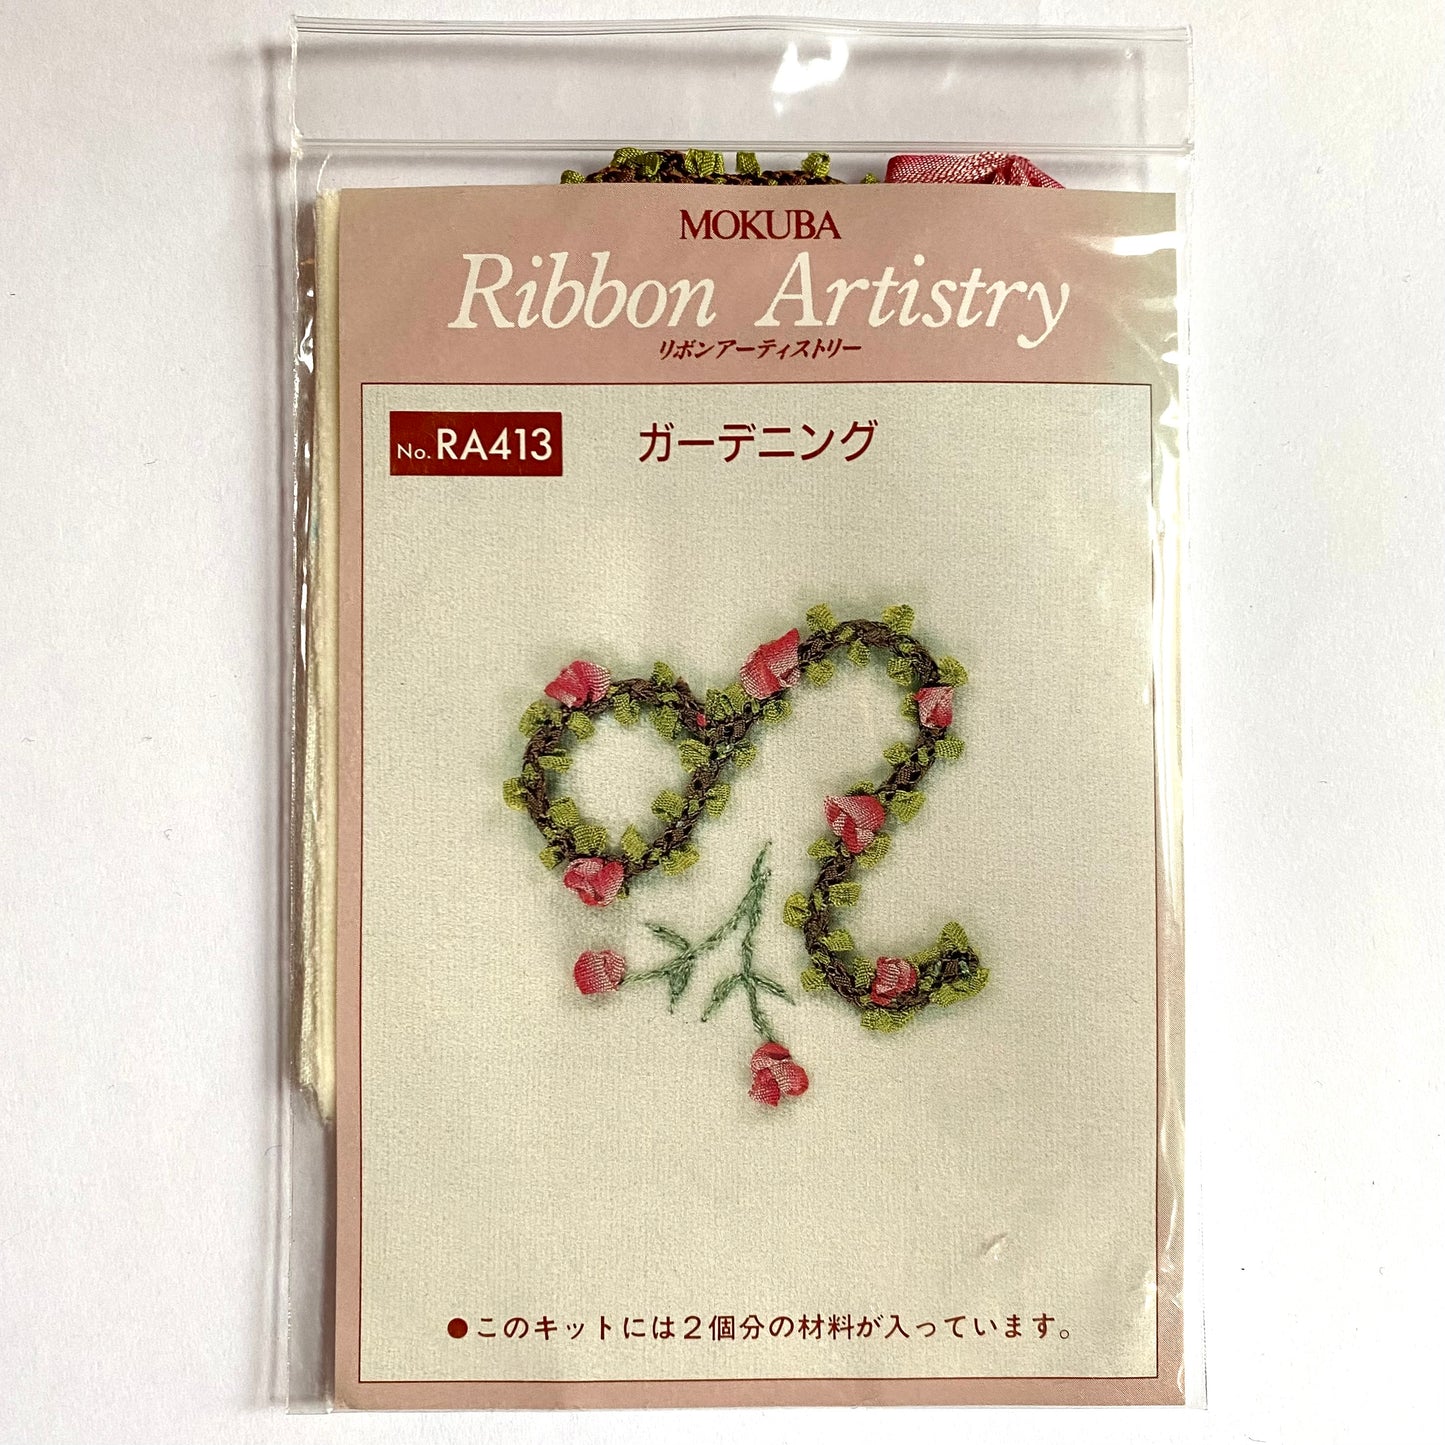 Mokuba embroidery kit (ribbon embroidery)